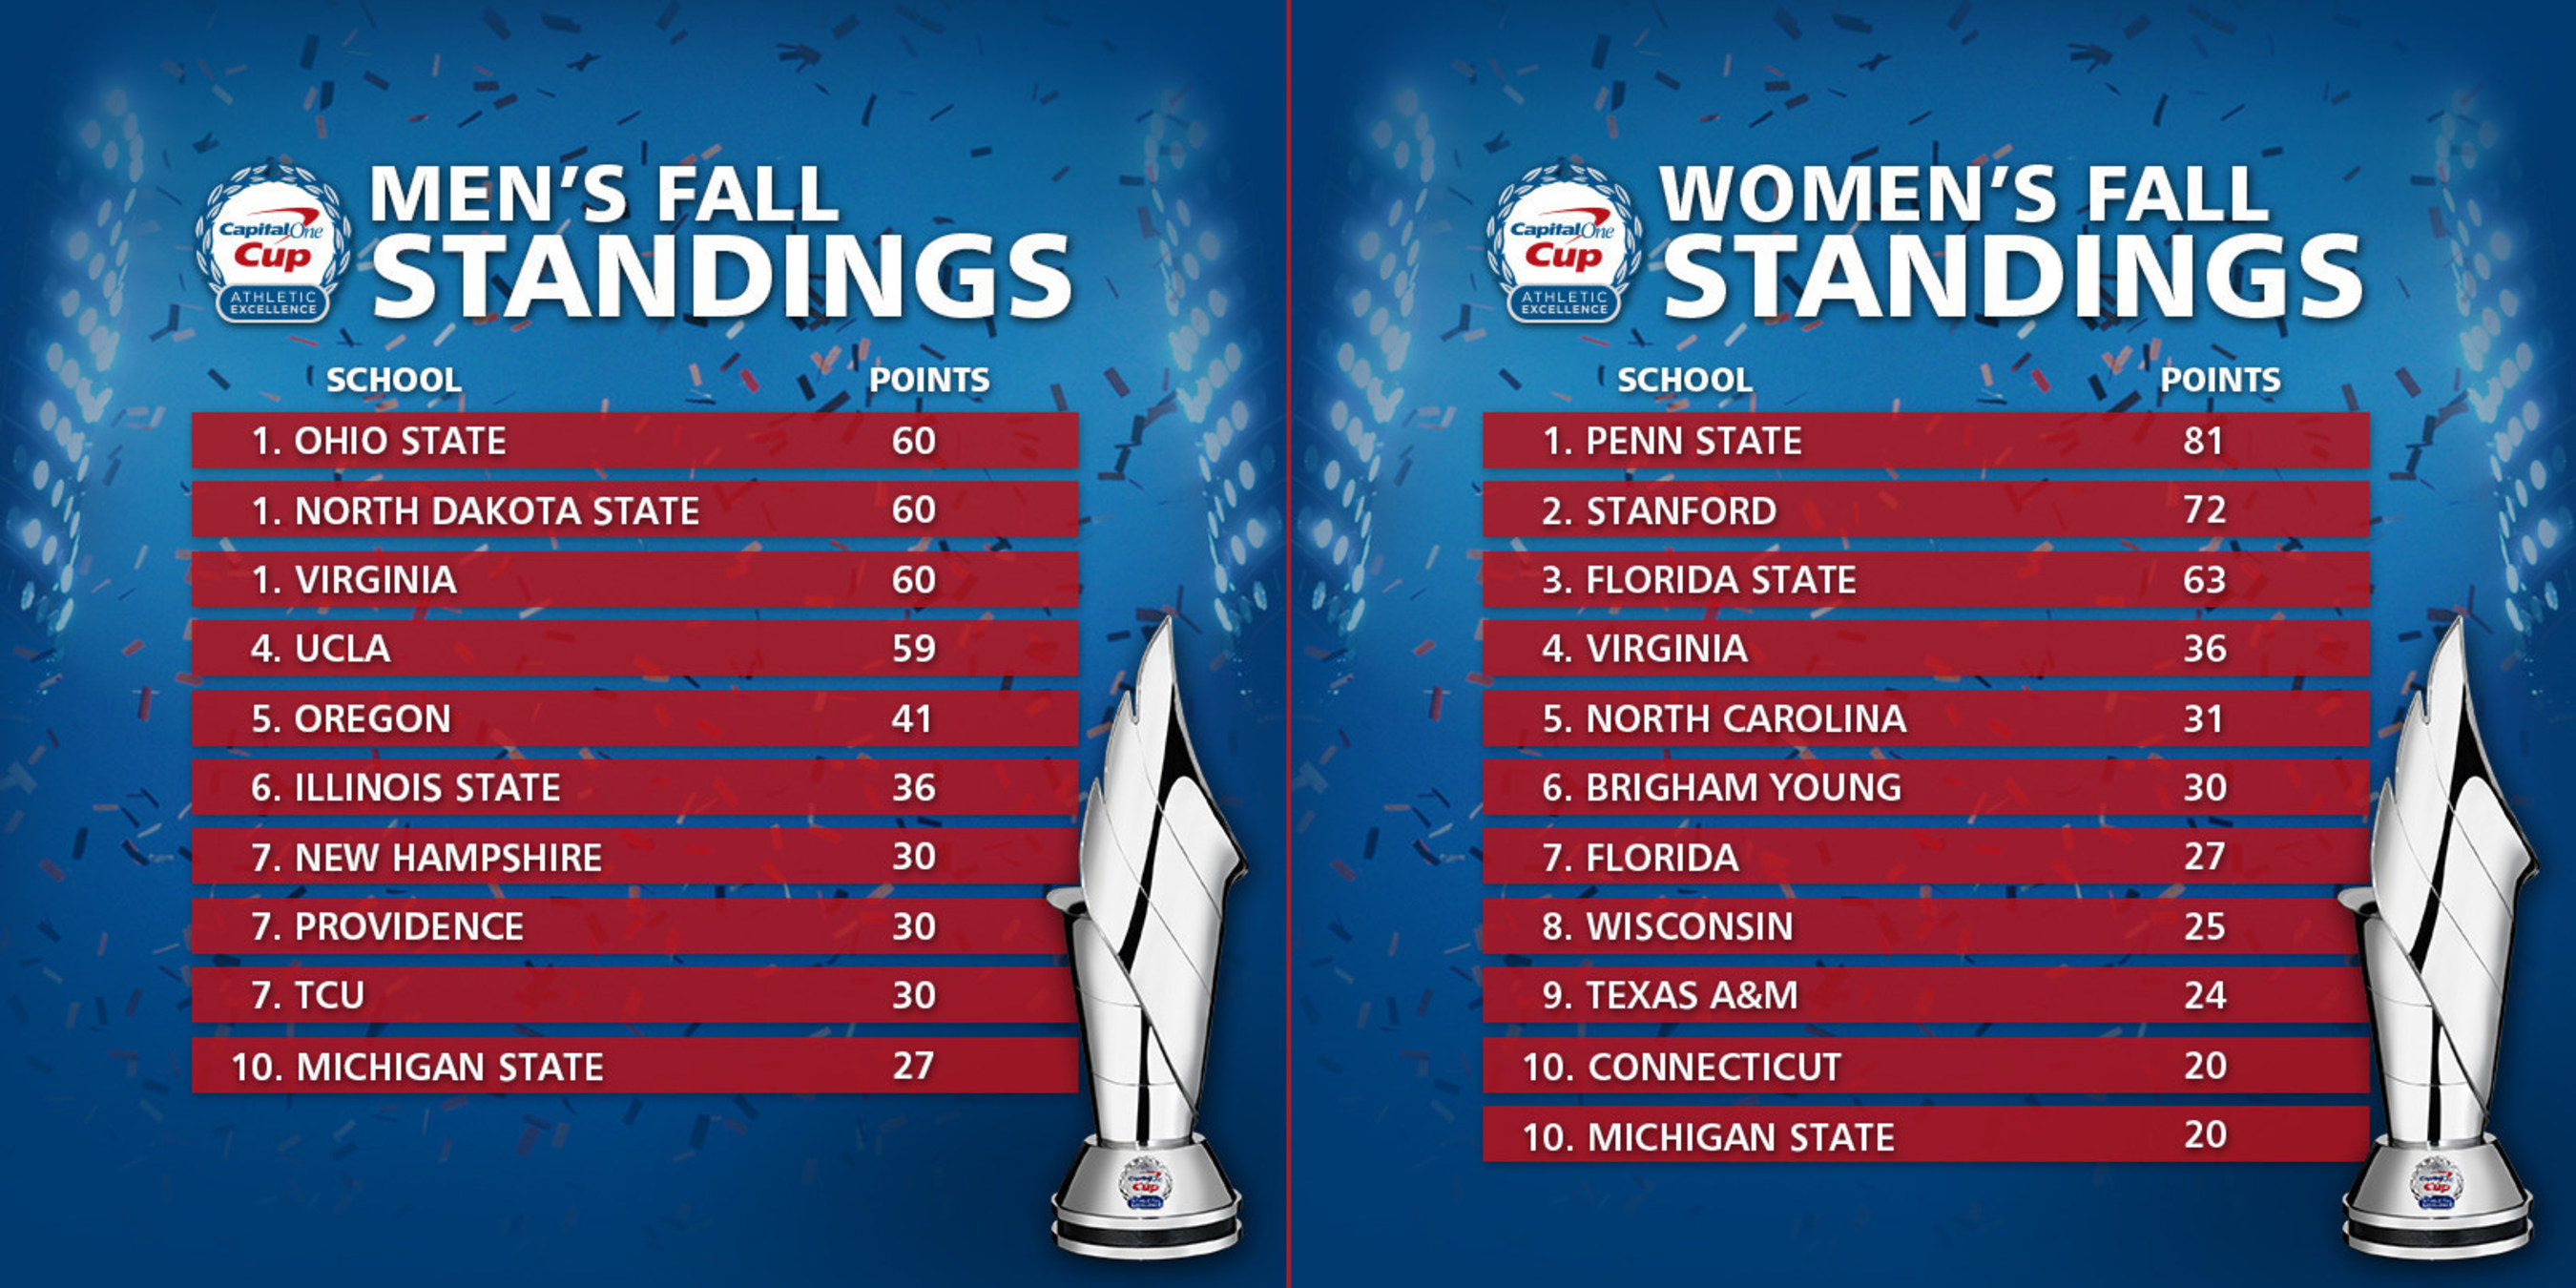 Capital One Cup 2015 Men's & Women's Fall Standings